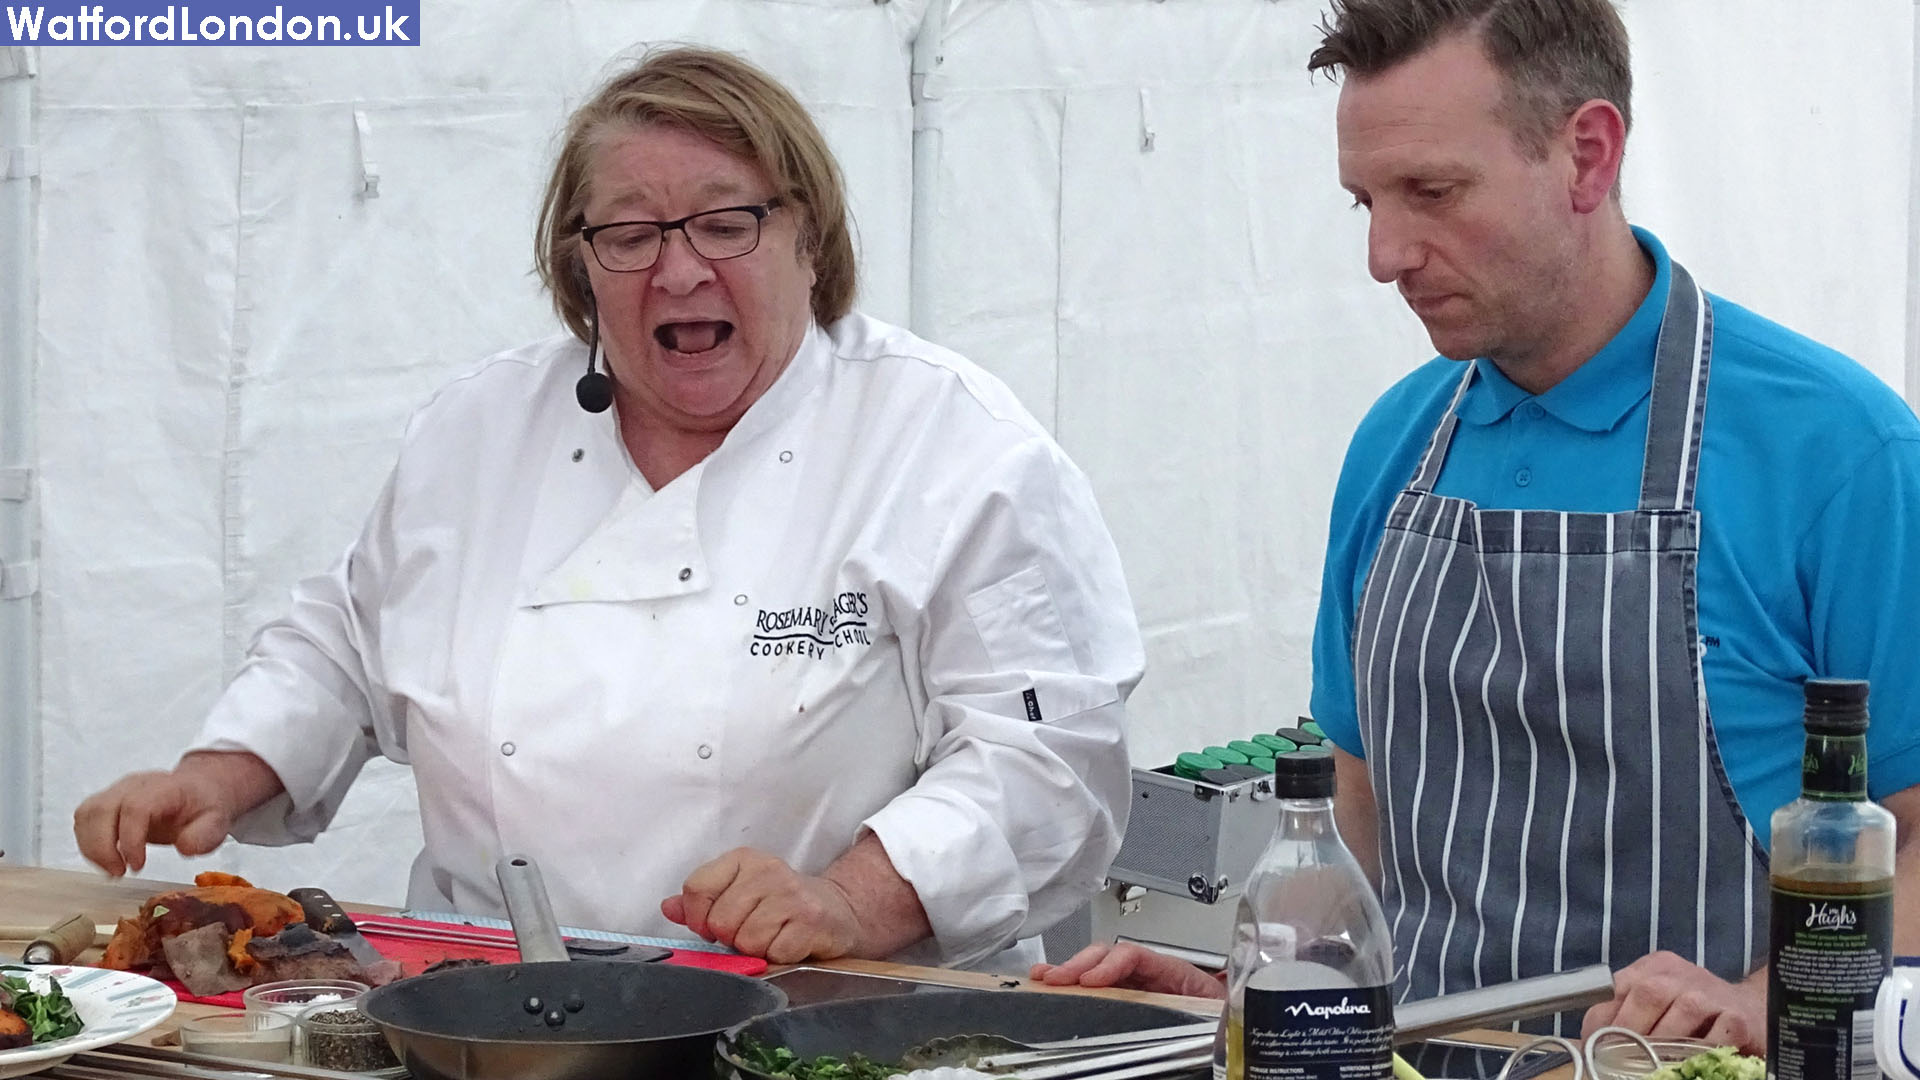 Celebrity Chef Rosemary Shrager at Watford Market Opening